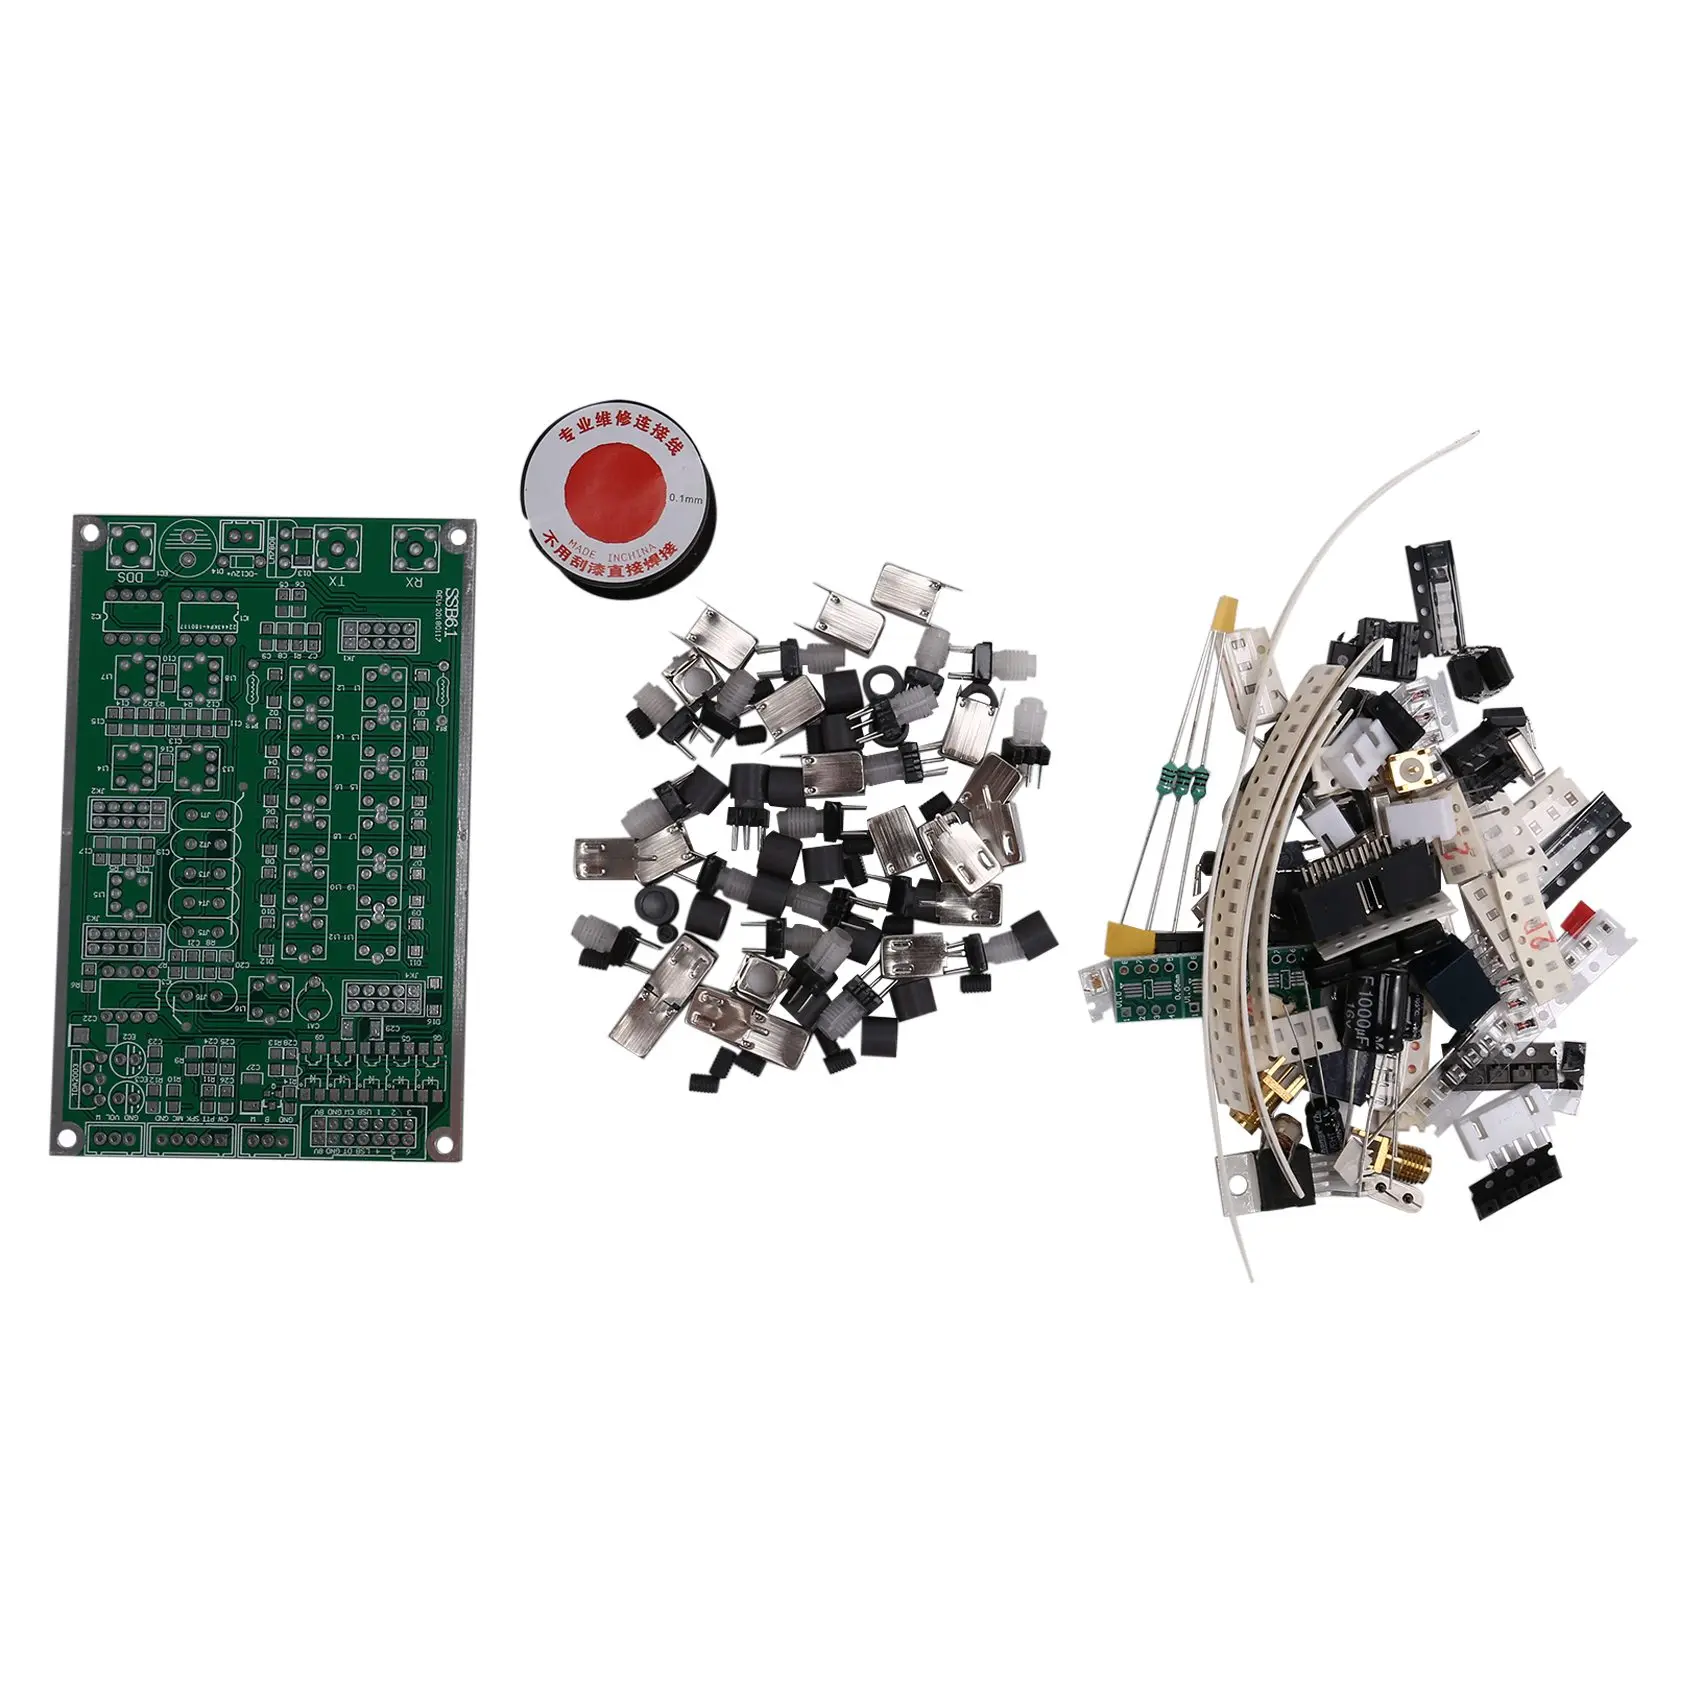 1Pcs New 6-Band HF SSB Shortwave Radio Transceiver Module DIY Kits C4-007